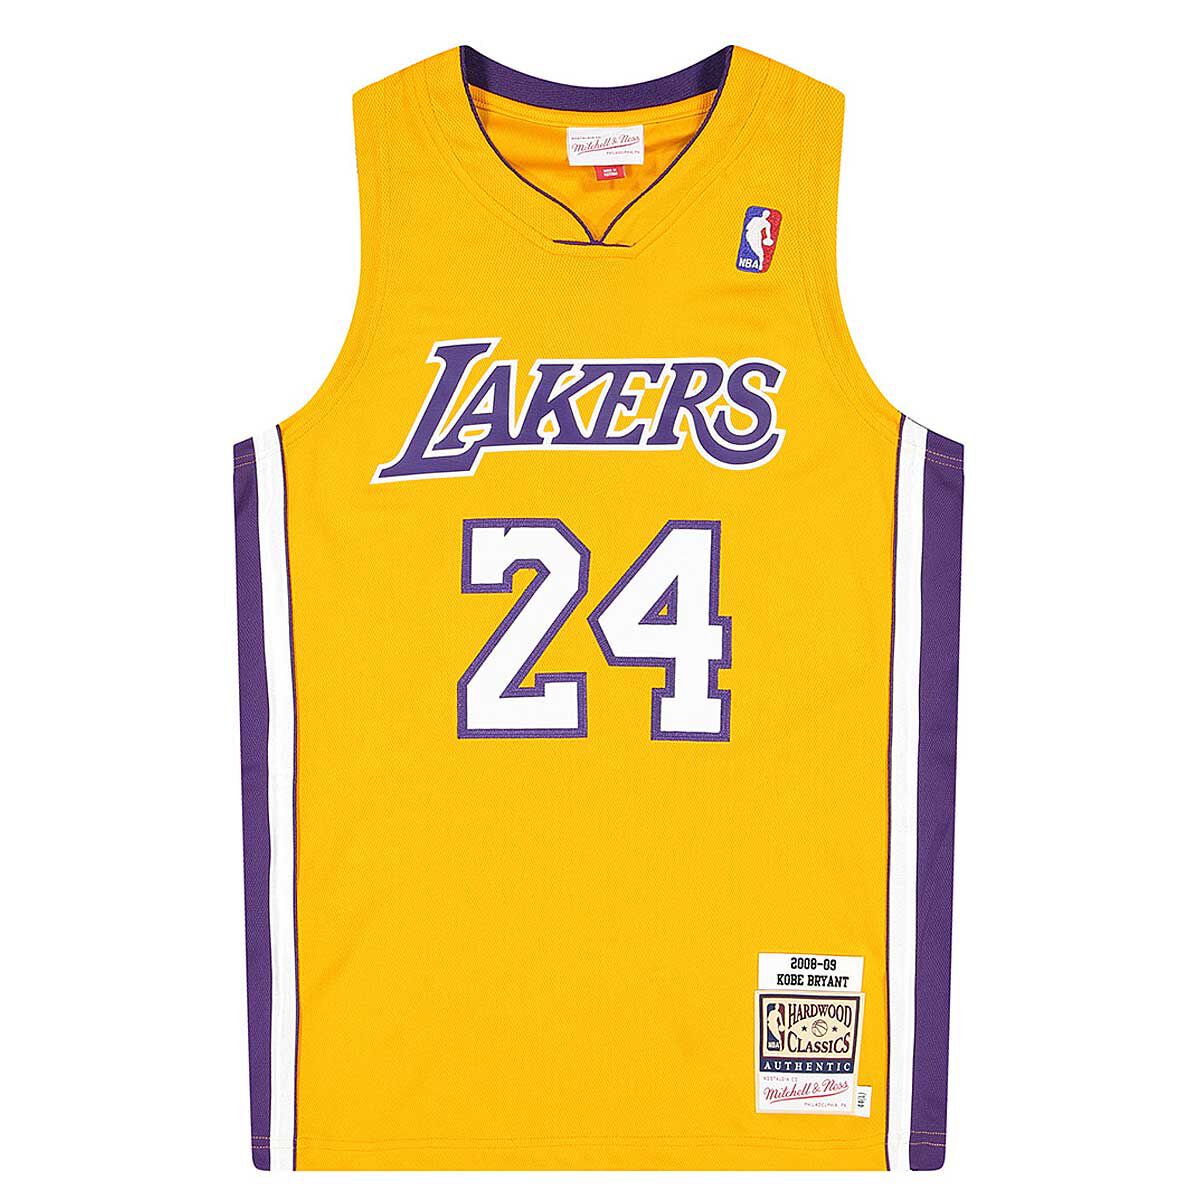 2008-2009 Finals Championship 08 09 Los Angeles Lakers #24 Kobe Bryant Jersey 